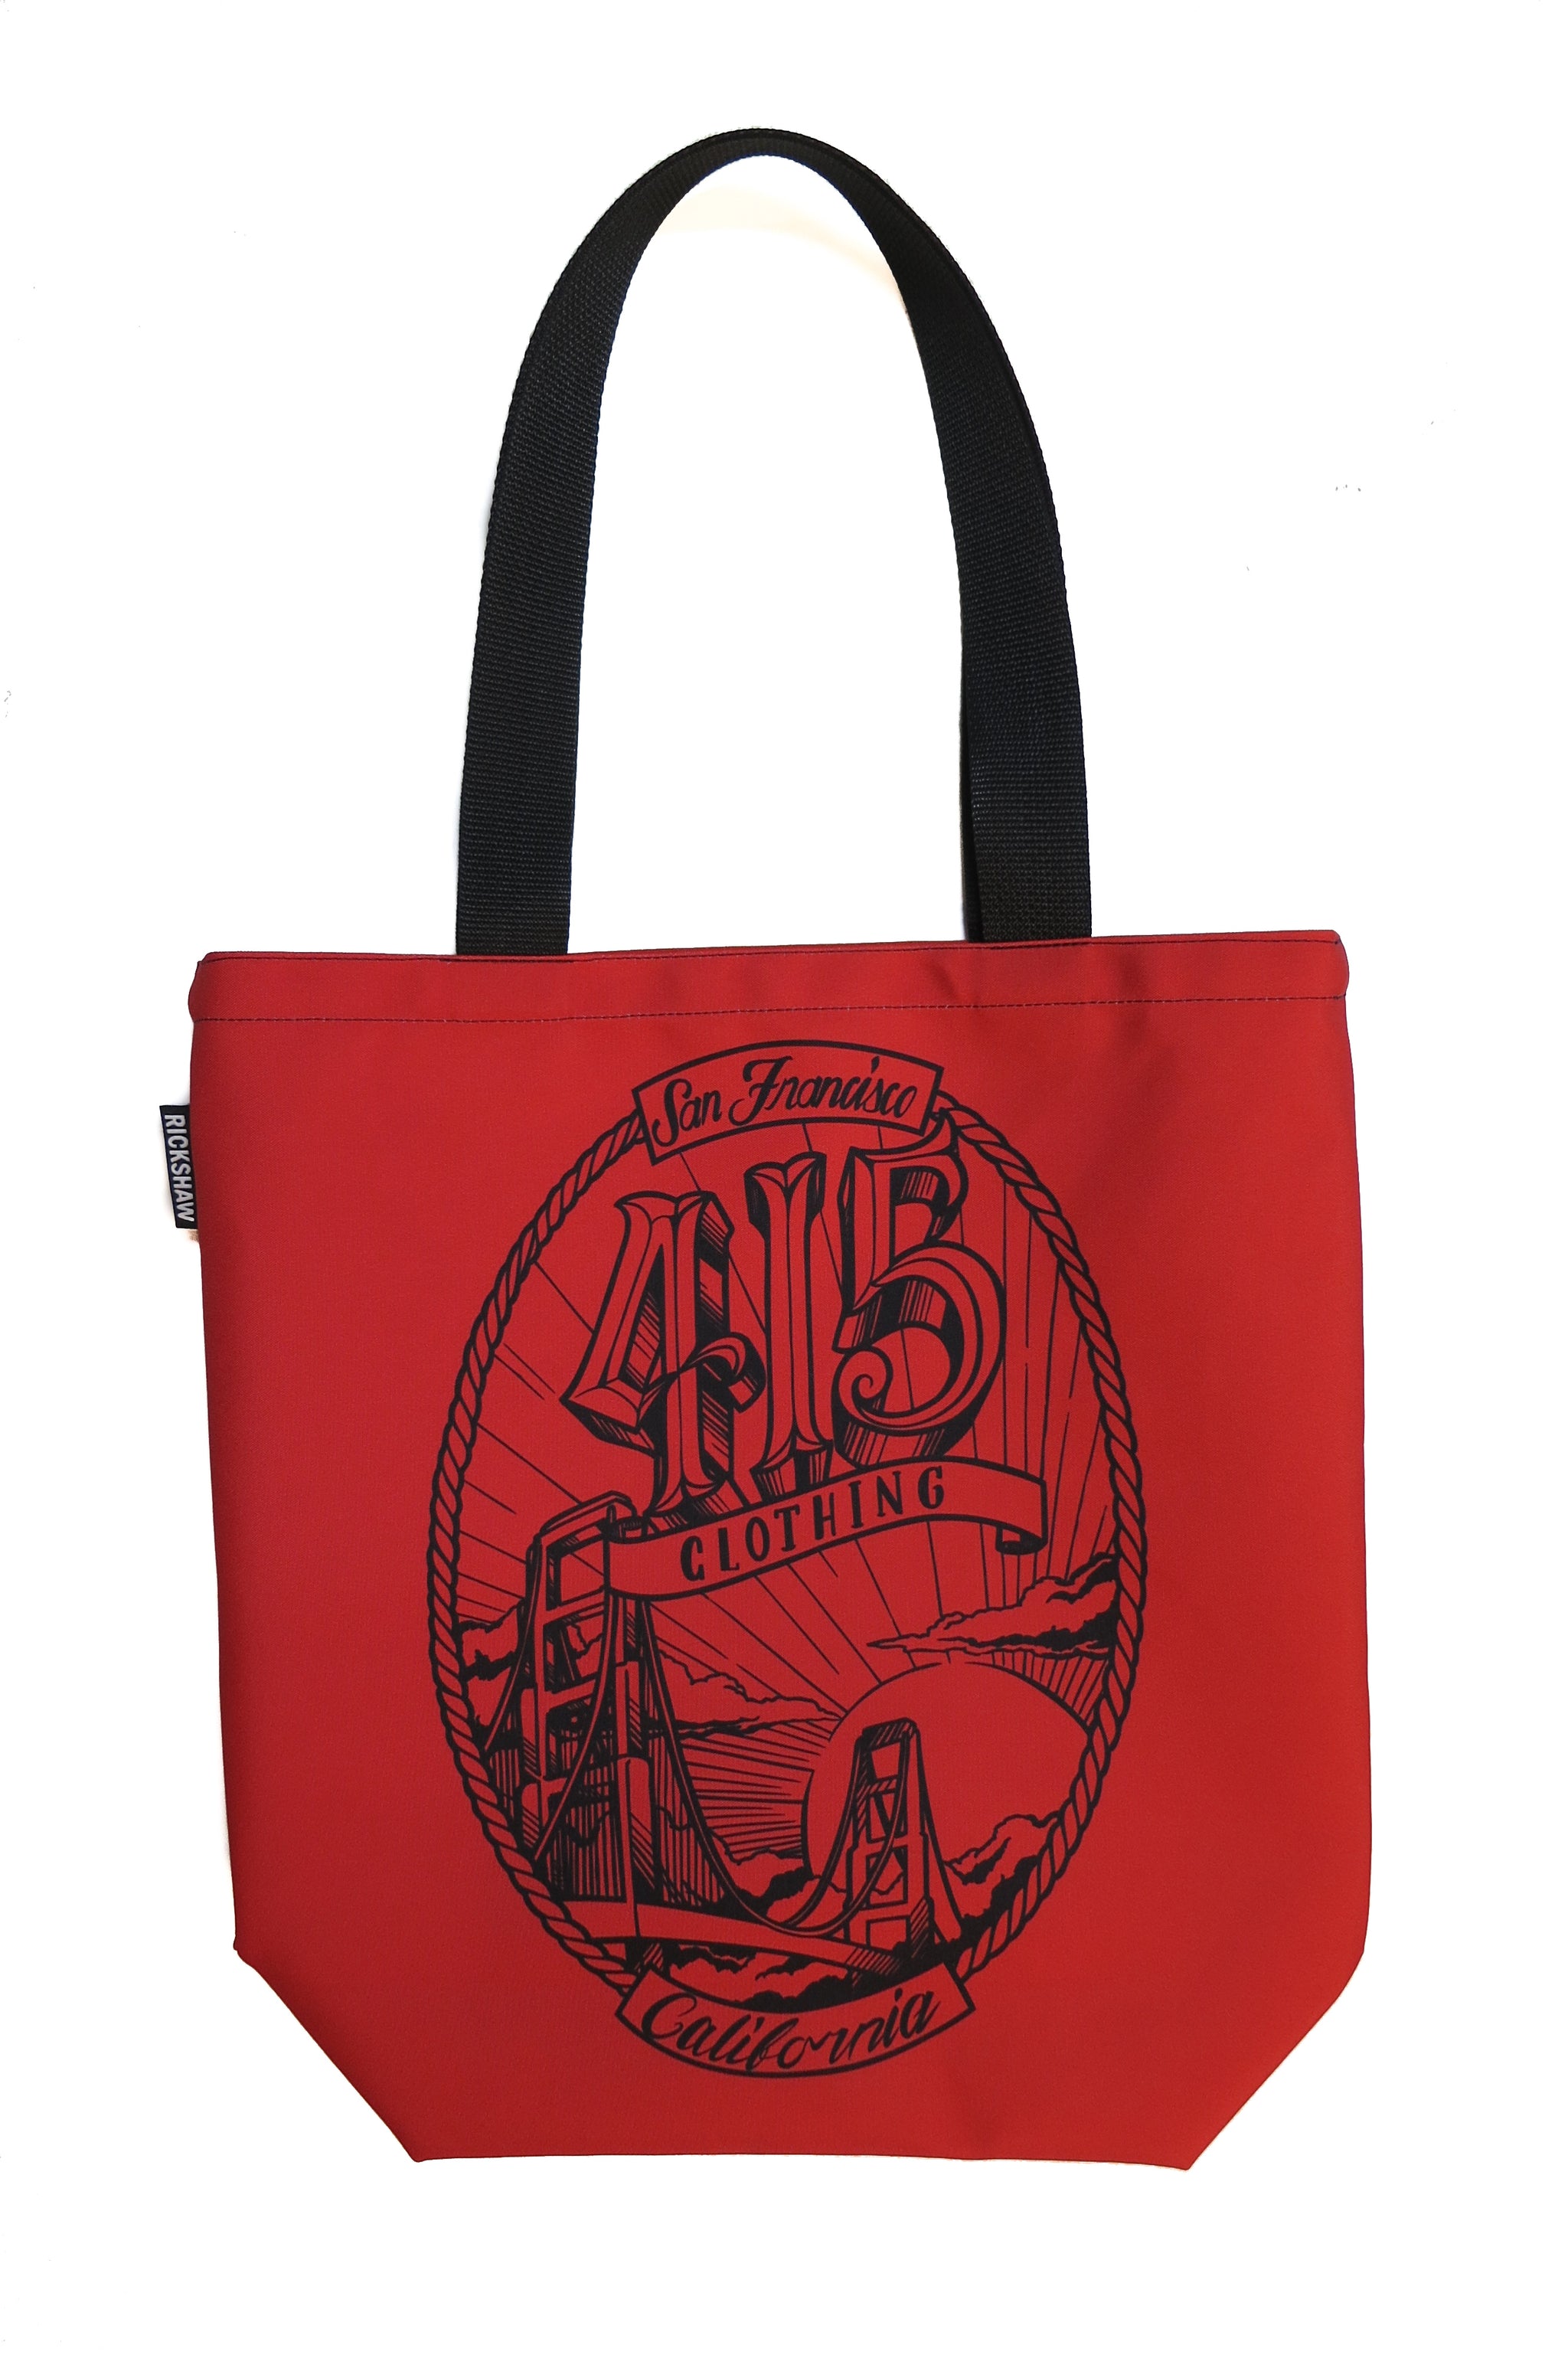 Kipling Red Tote Bag Purse Handbag Carryall Large | Red tote bag, Red tote,  Purses and bags